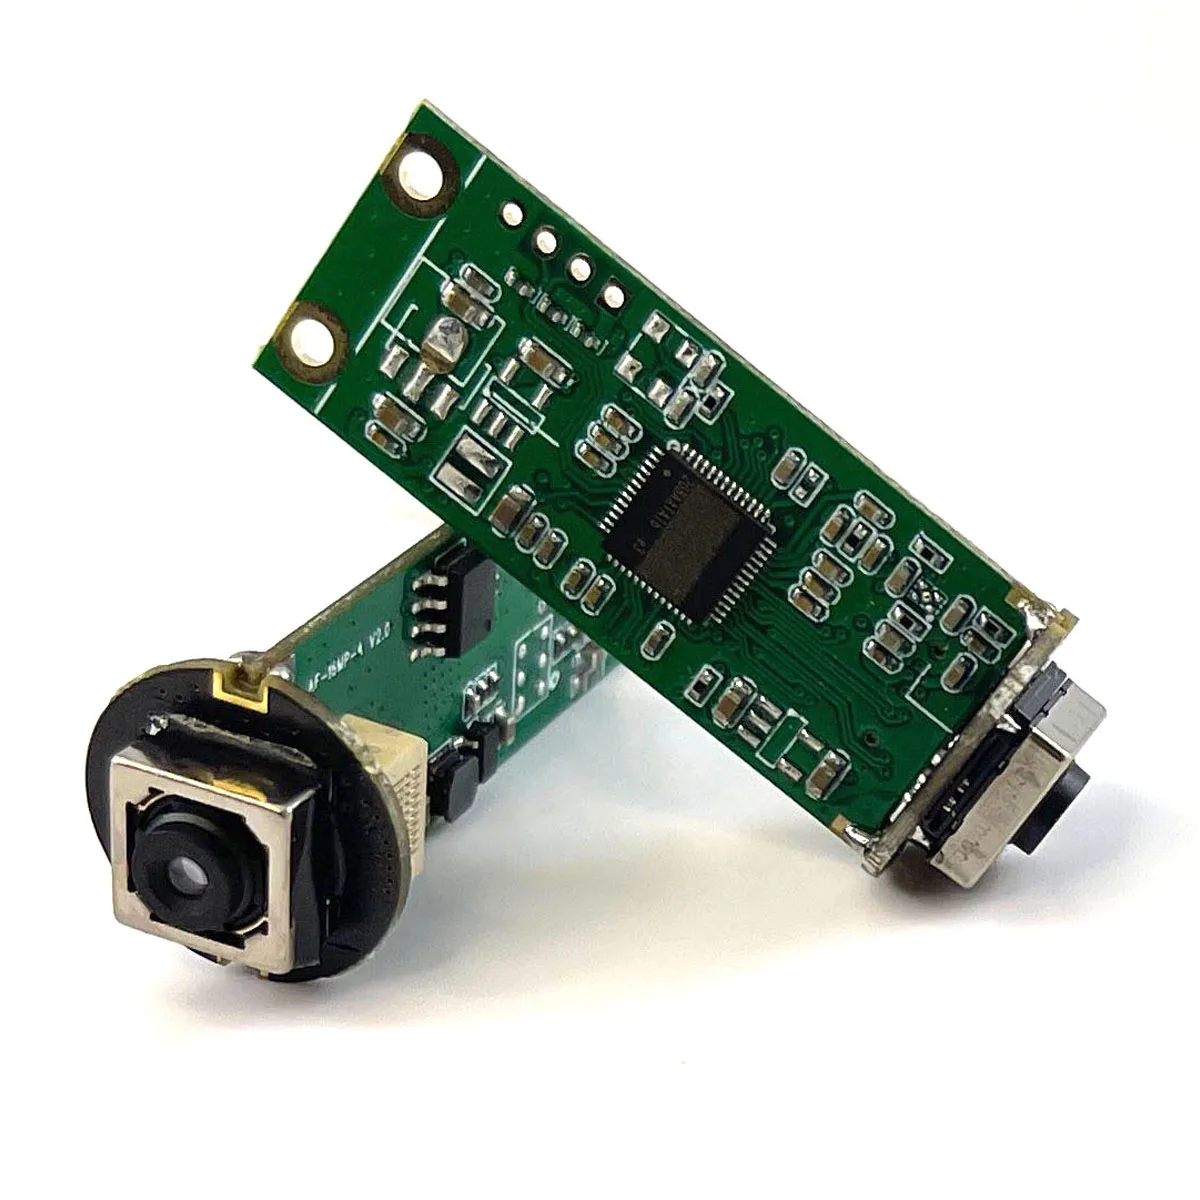 

Industrial Vision Small USB Webcam Autofocus Sony CMOS IMX298 16MP 4656x3496 AF Camera Module PCB Board